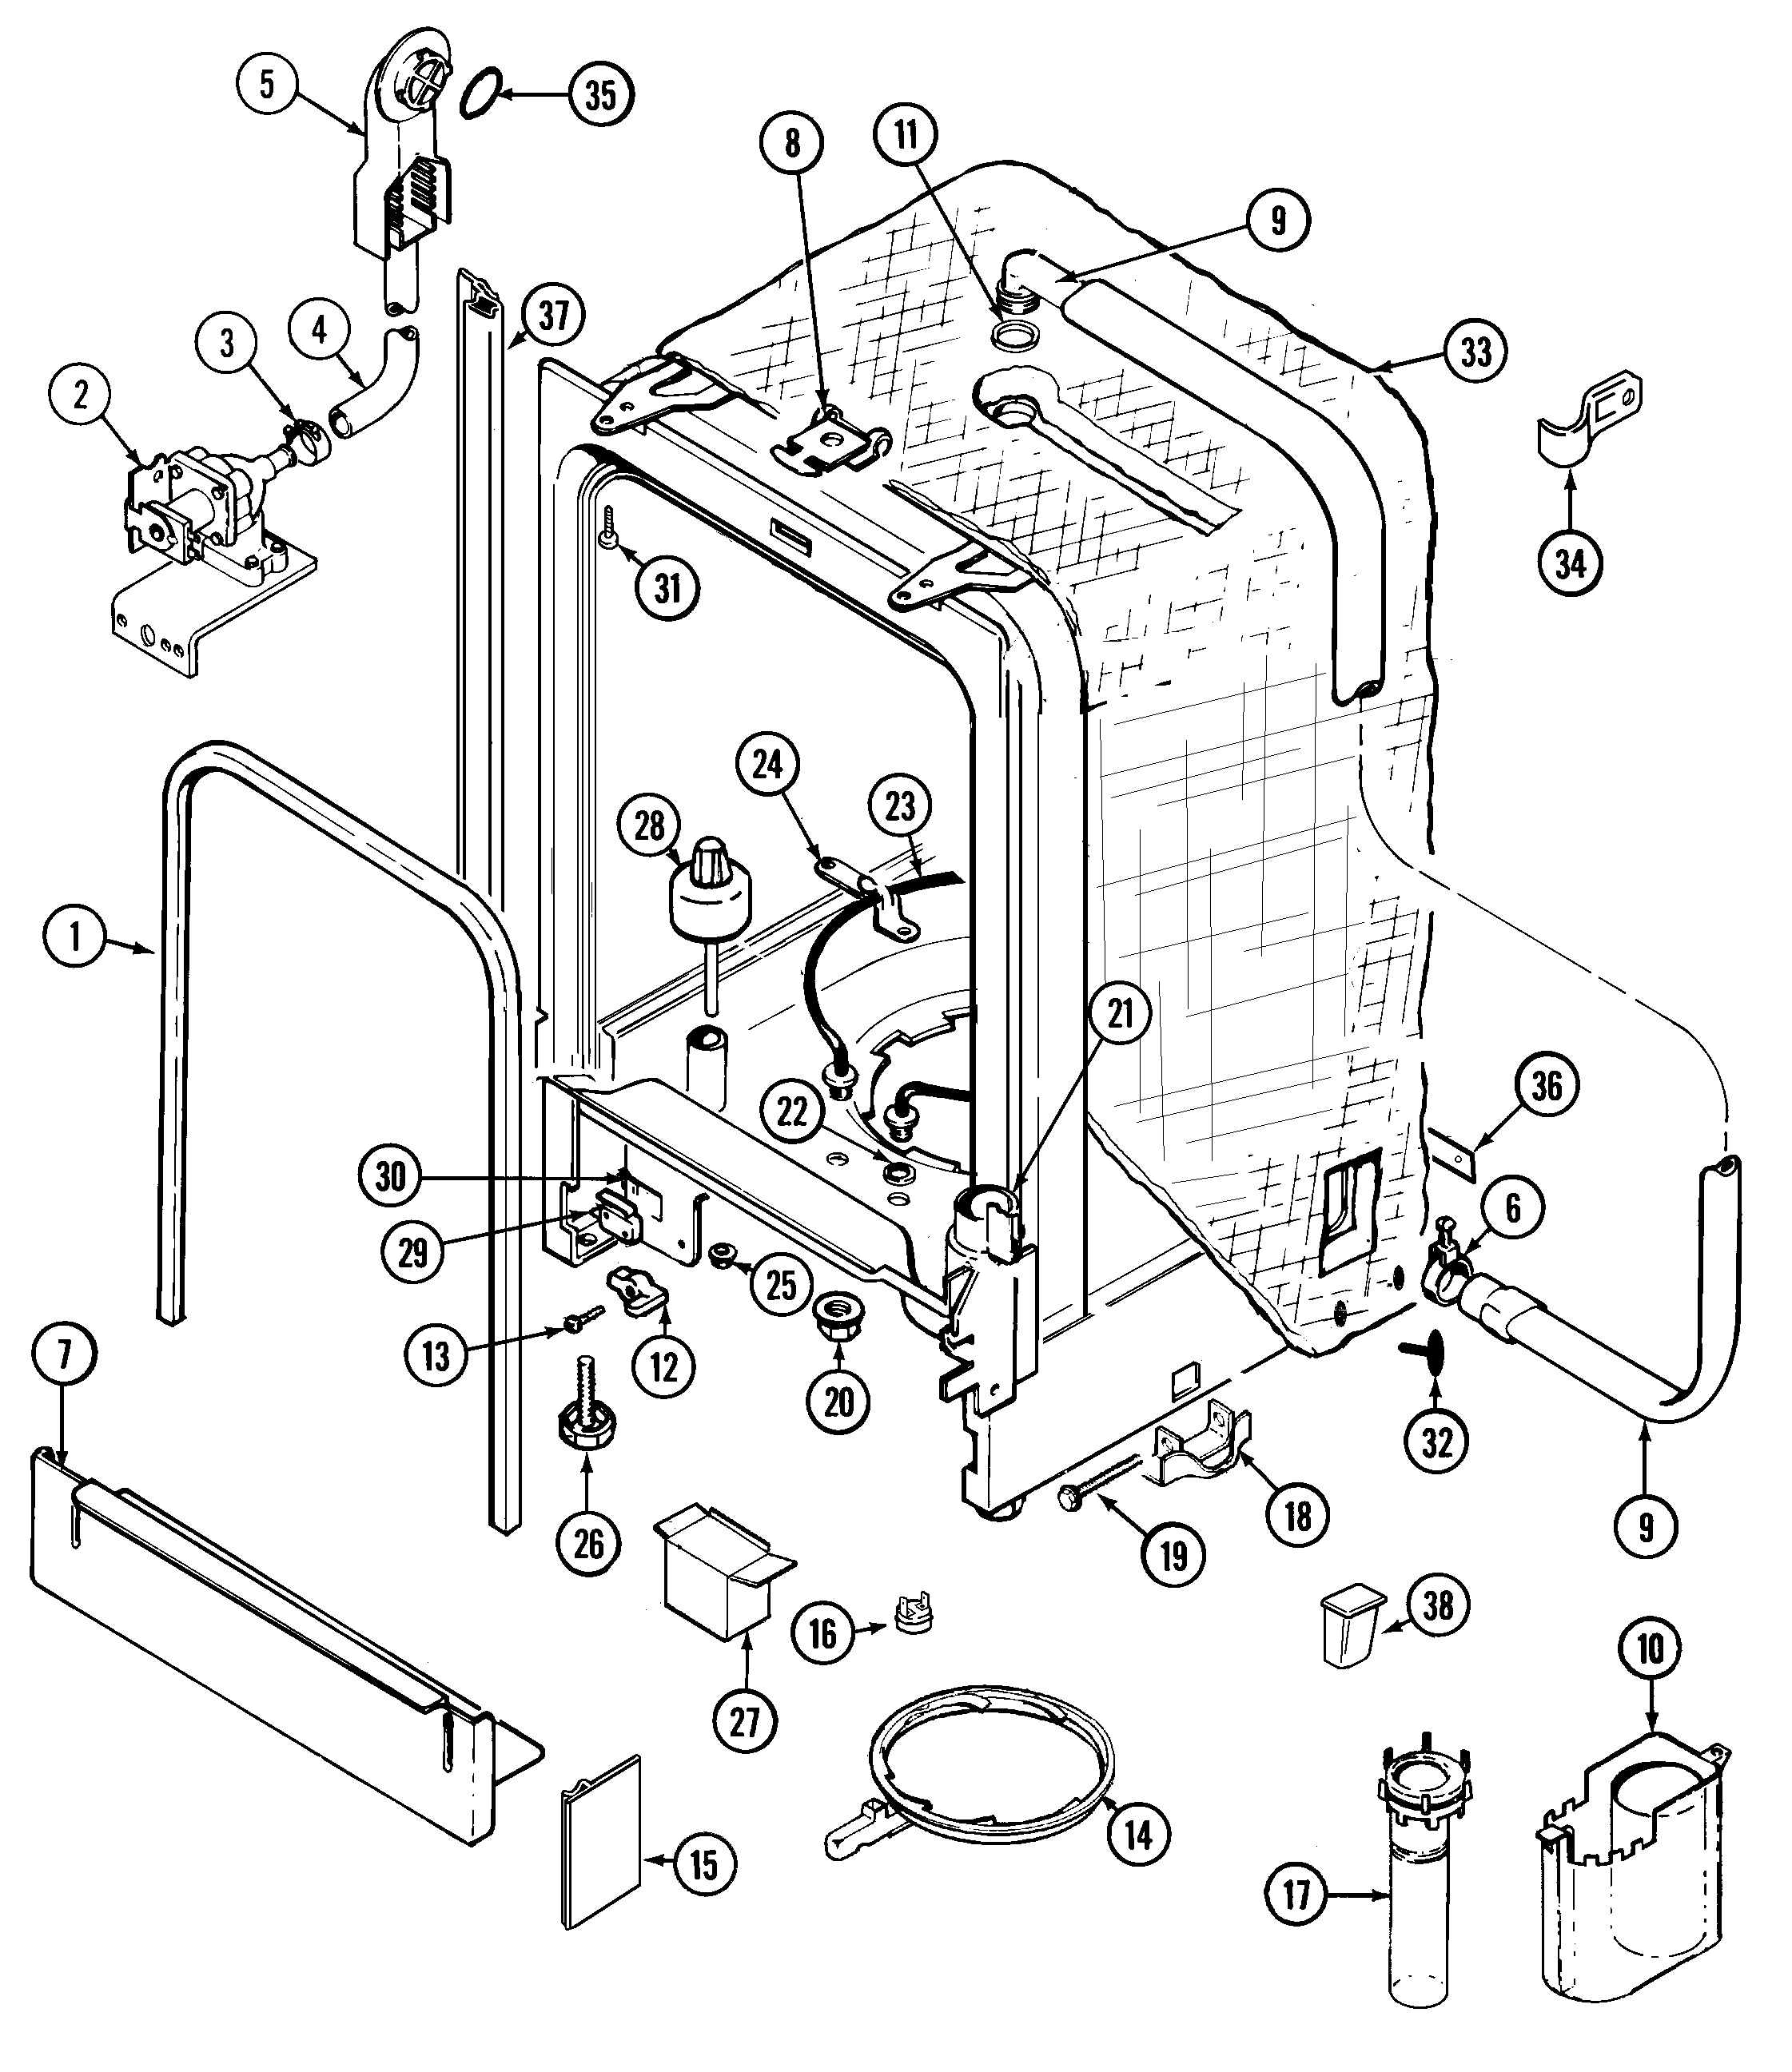 Whirlpool Gold Series Dishwasher Parts Diagram